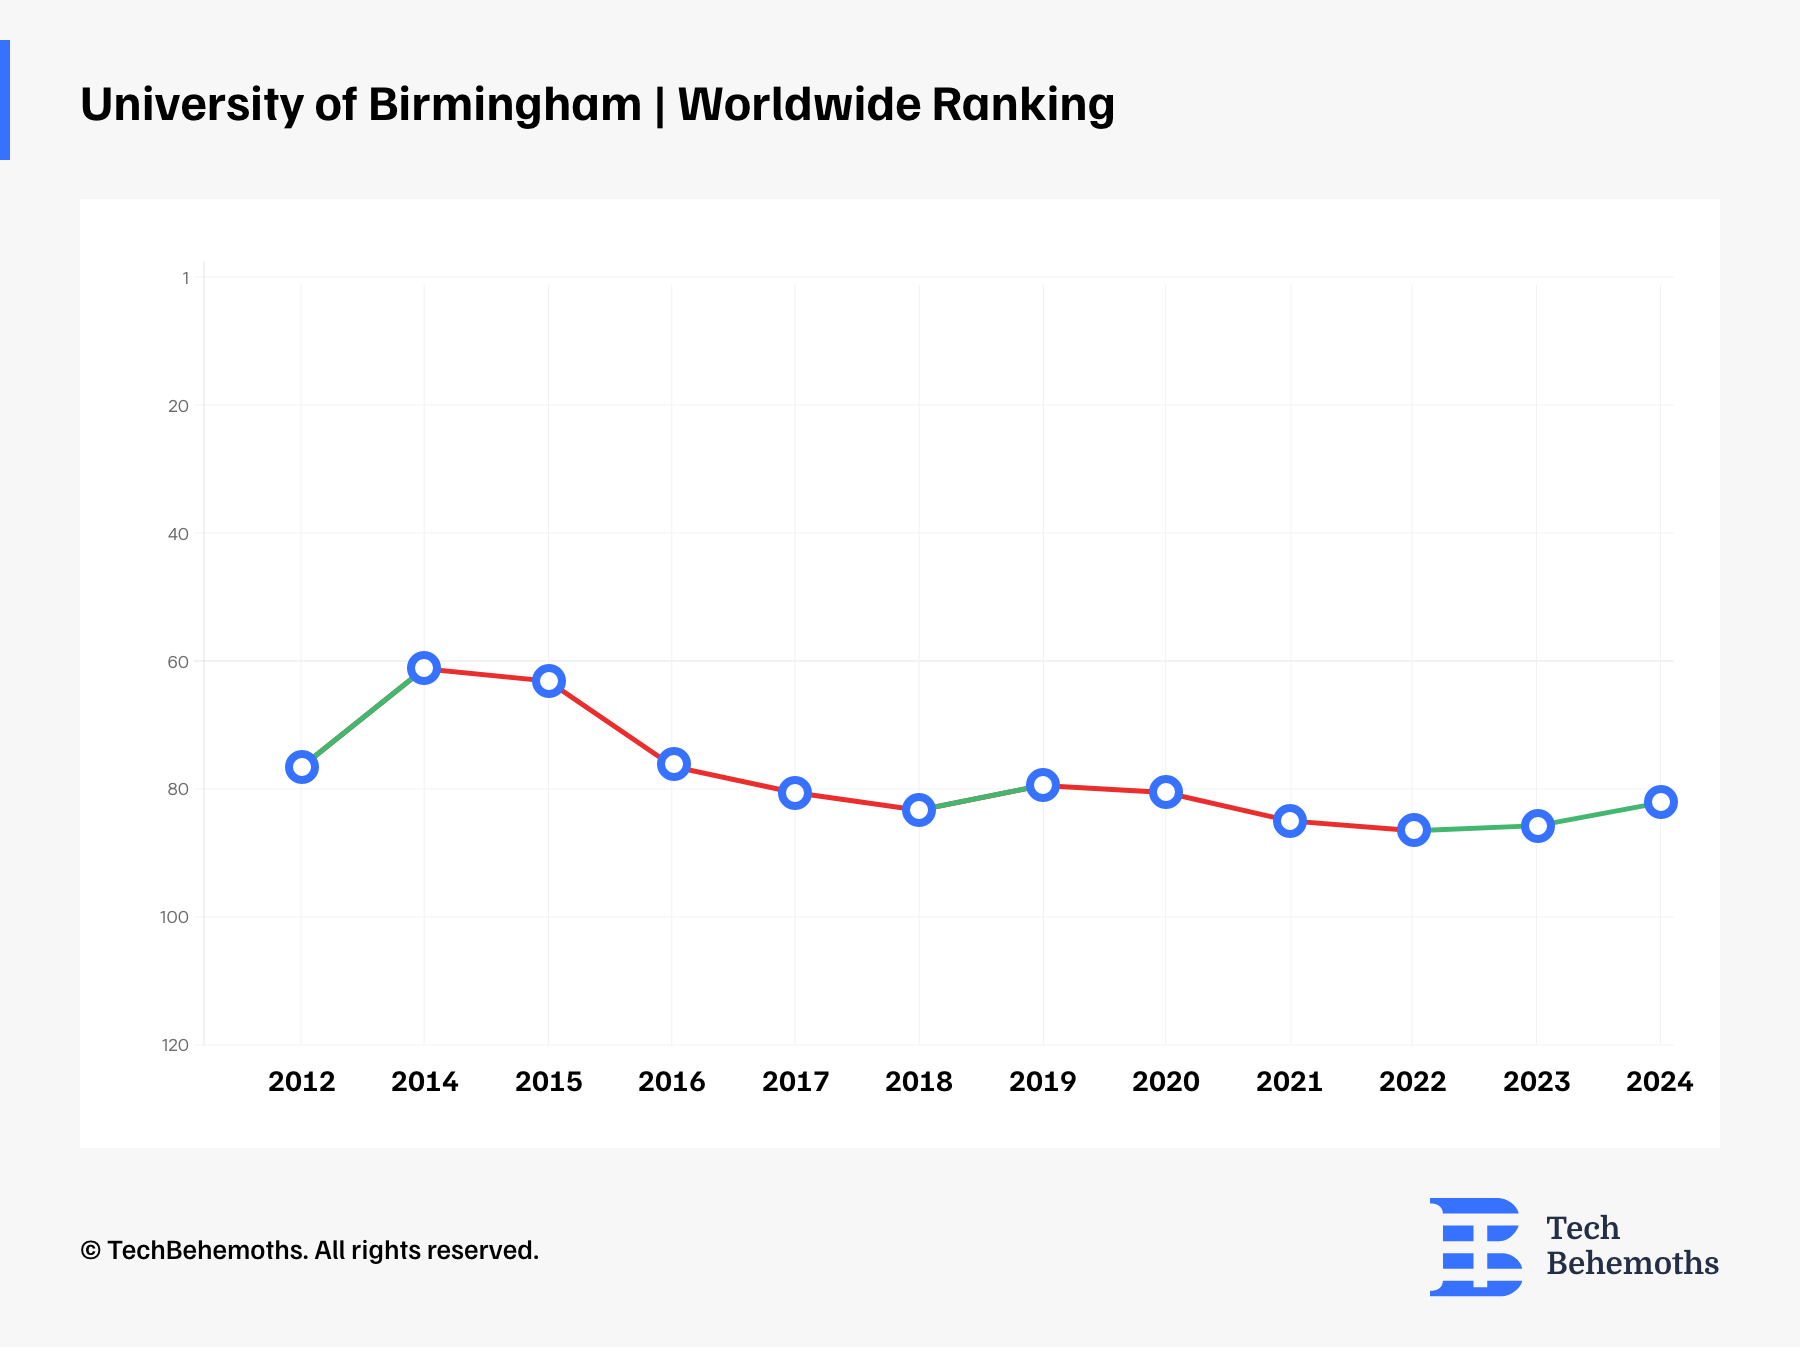 University of Birmingham Ranking